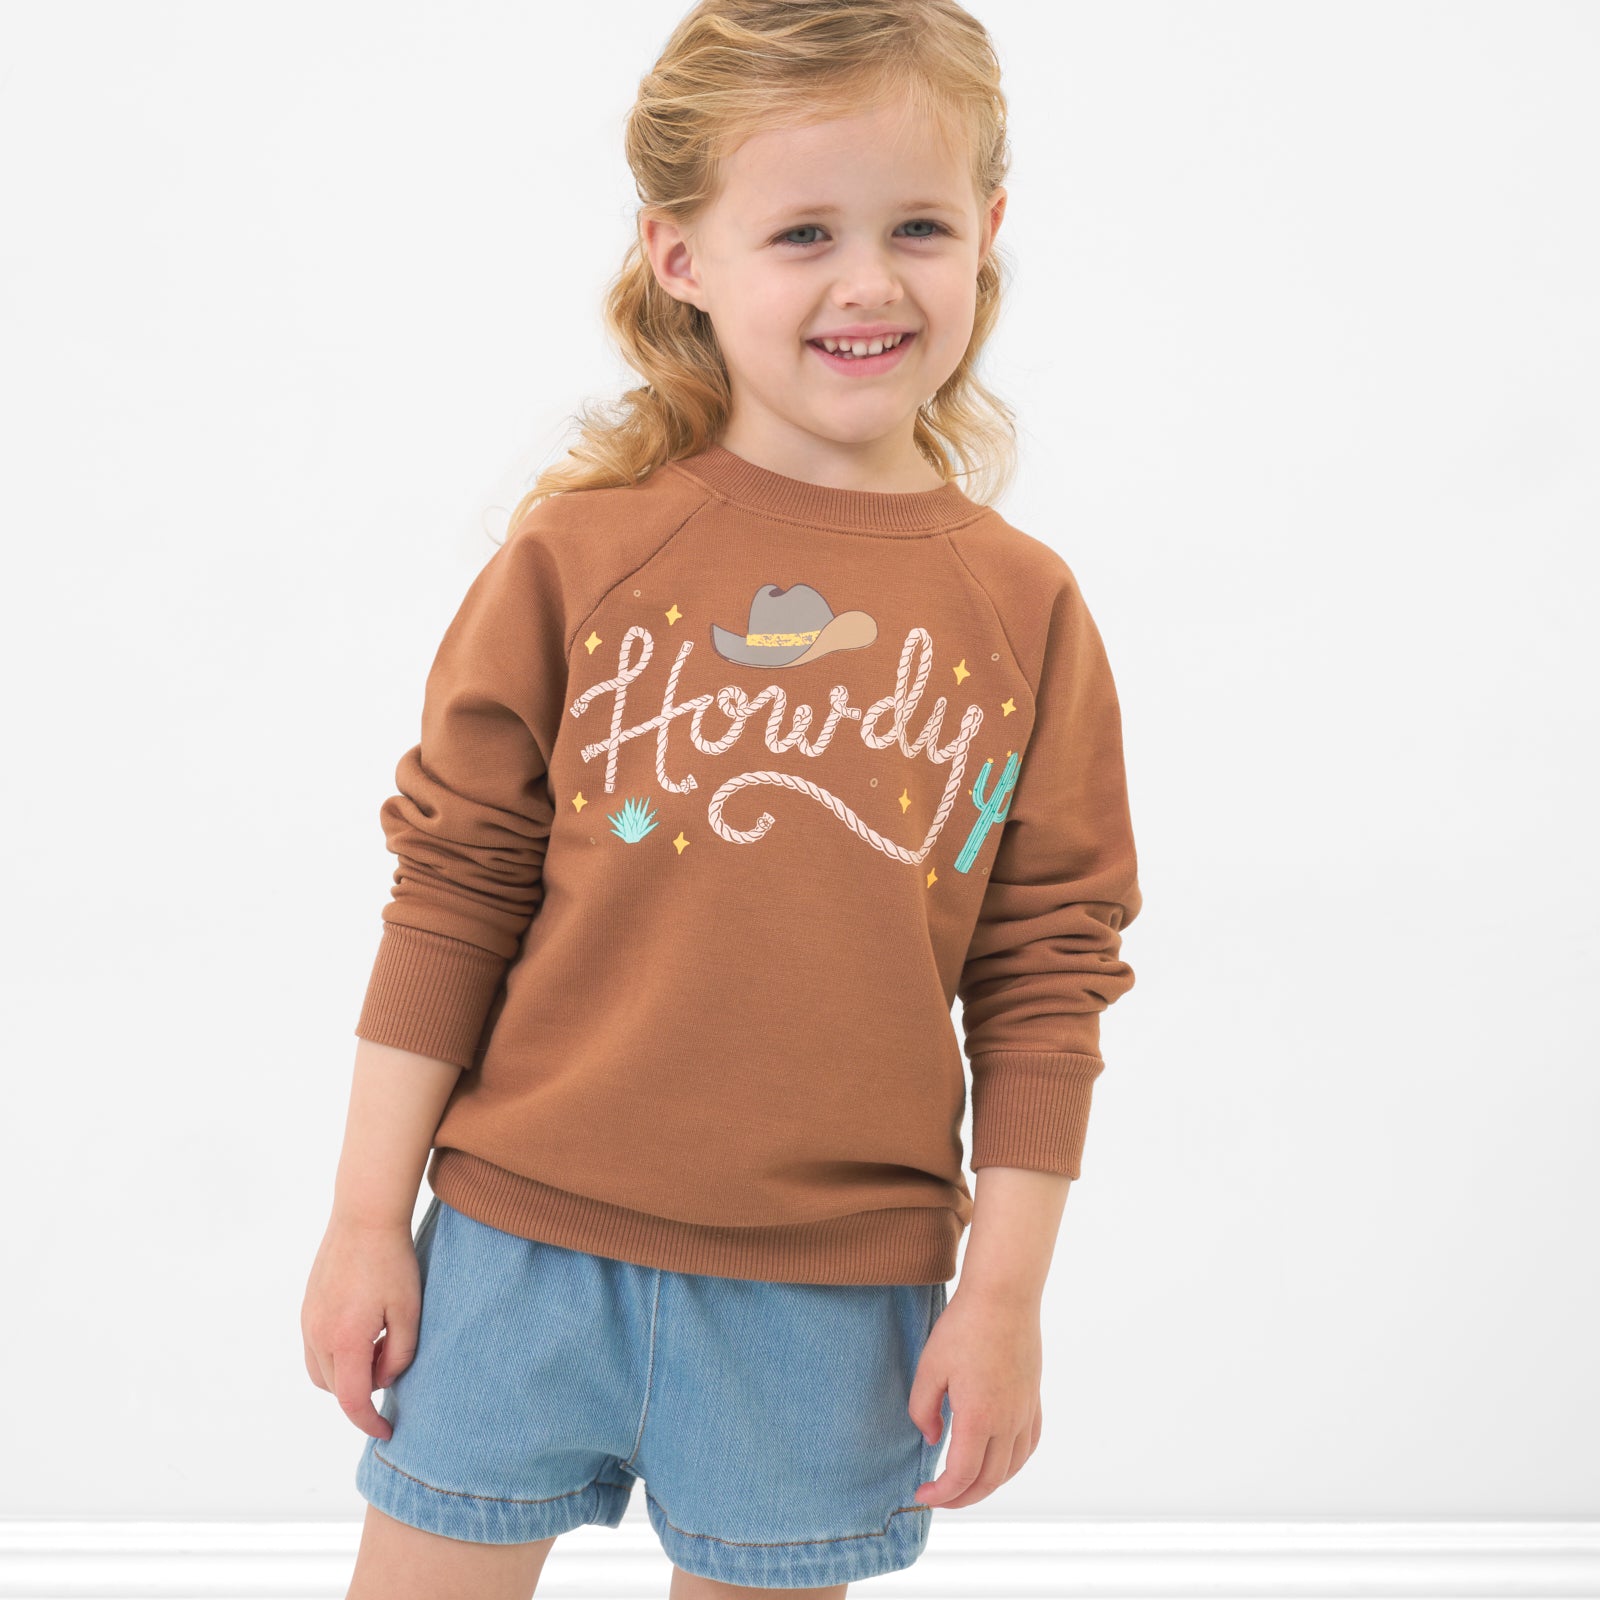 Child wearing a Howdy crewneck sweatshirt